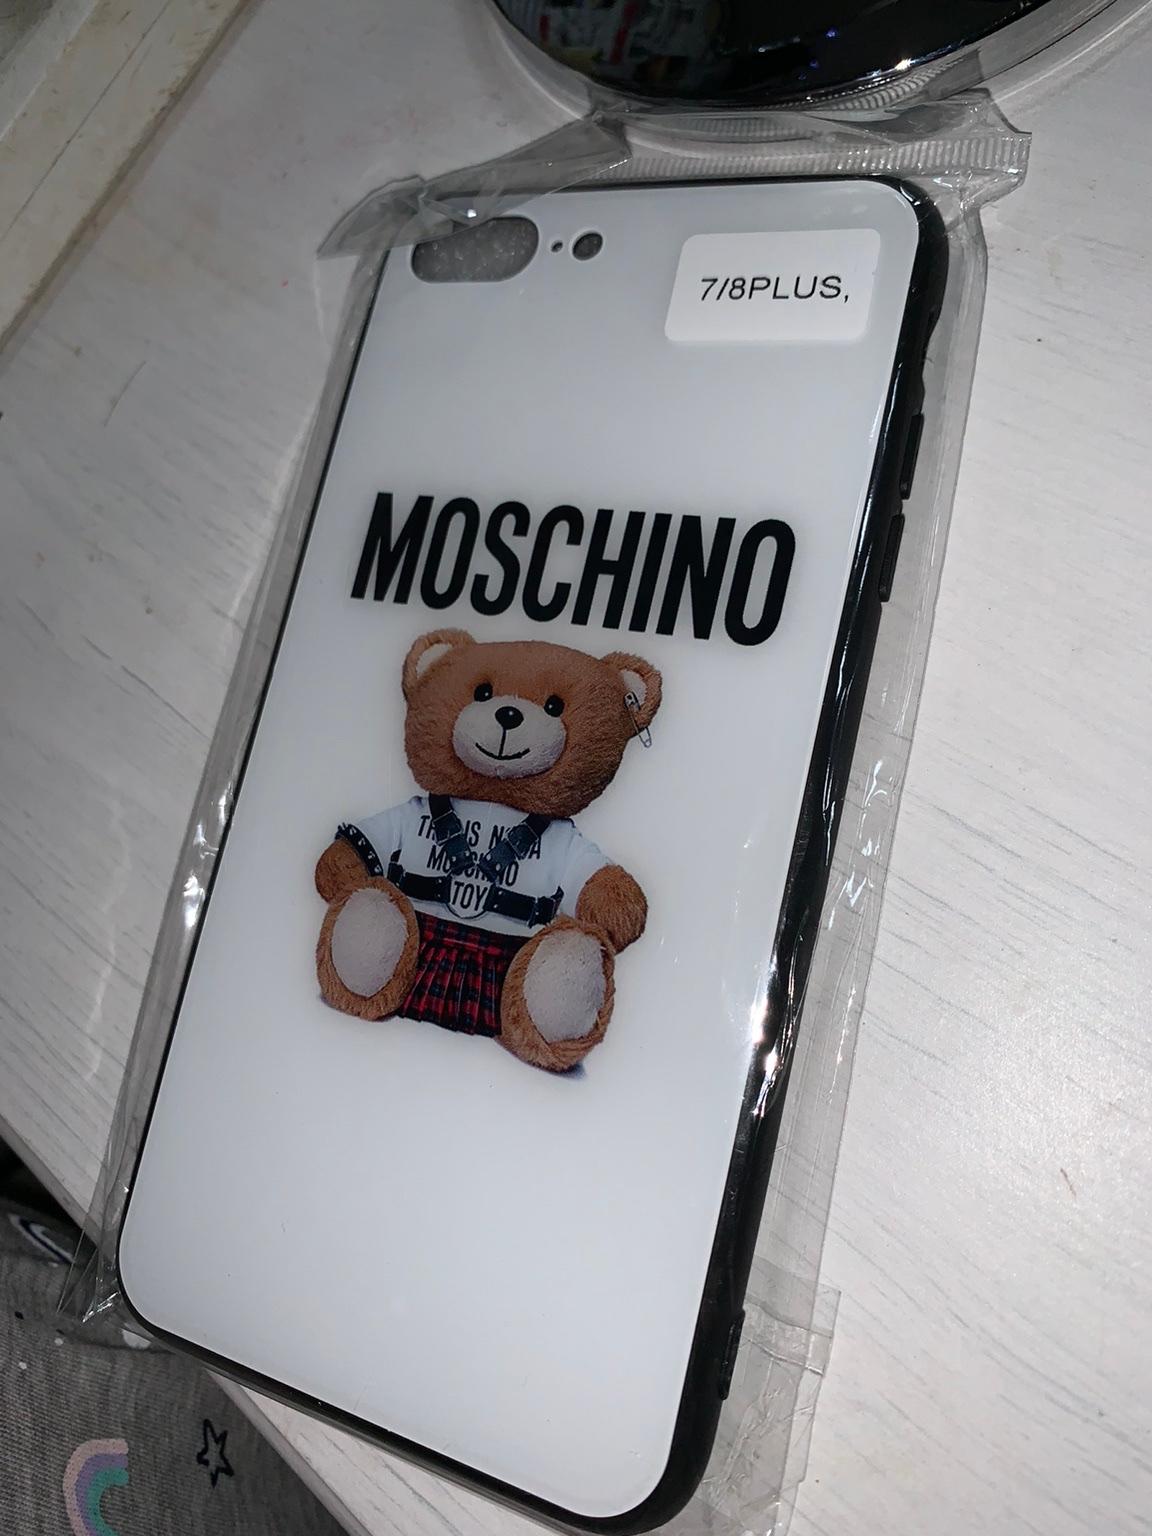 moschino iphone 7 plus phone case